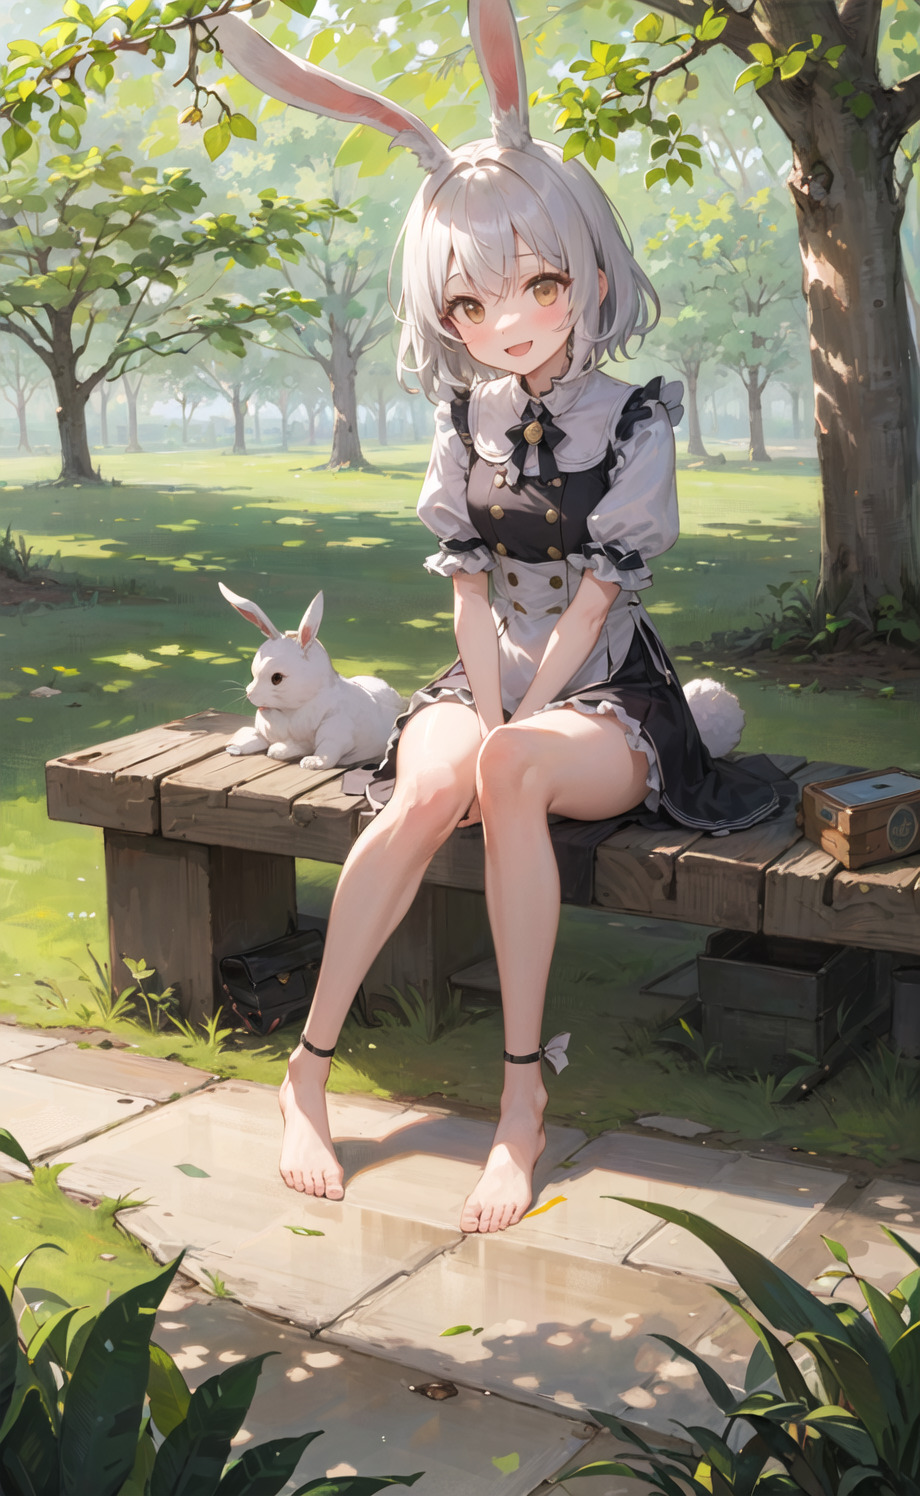 Cute Anime Bunnies GIFs | Tenor